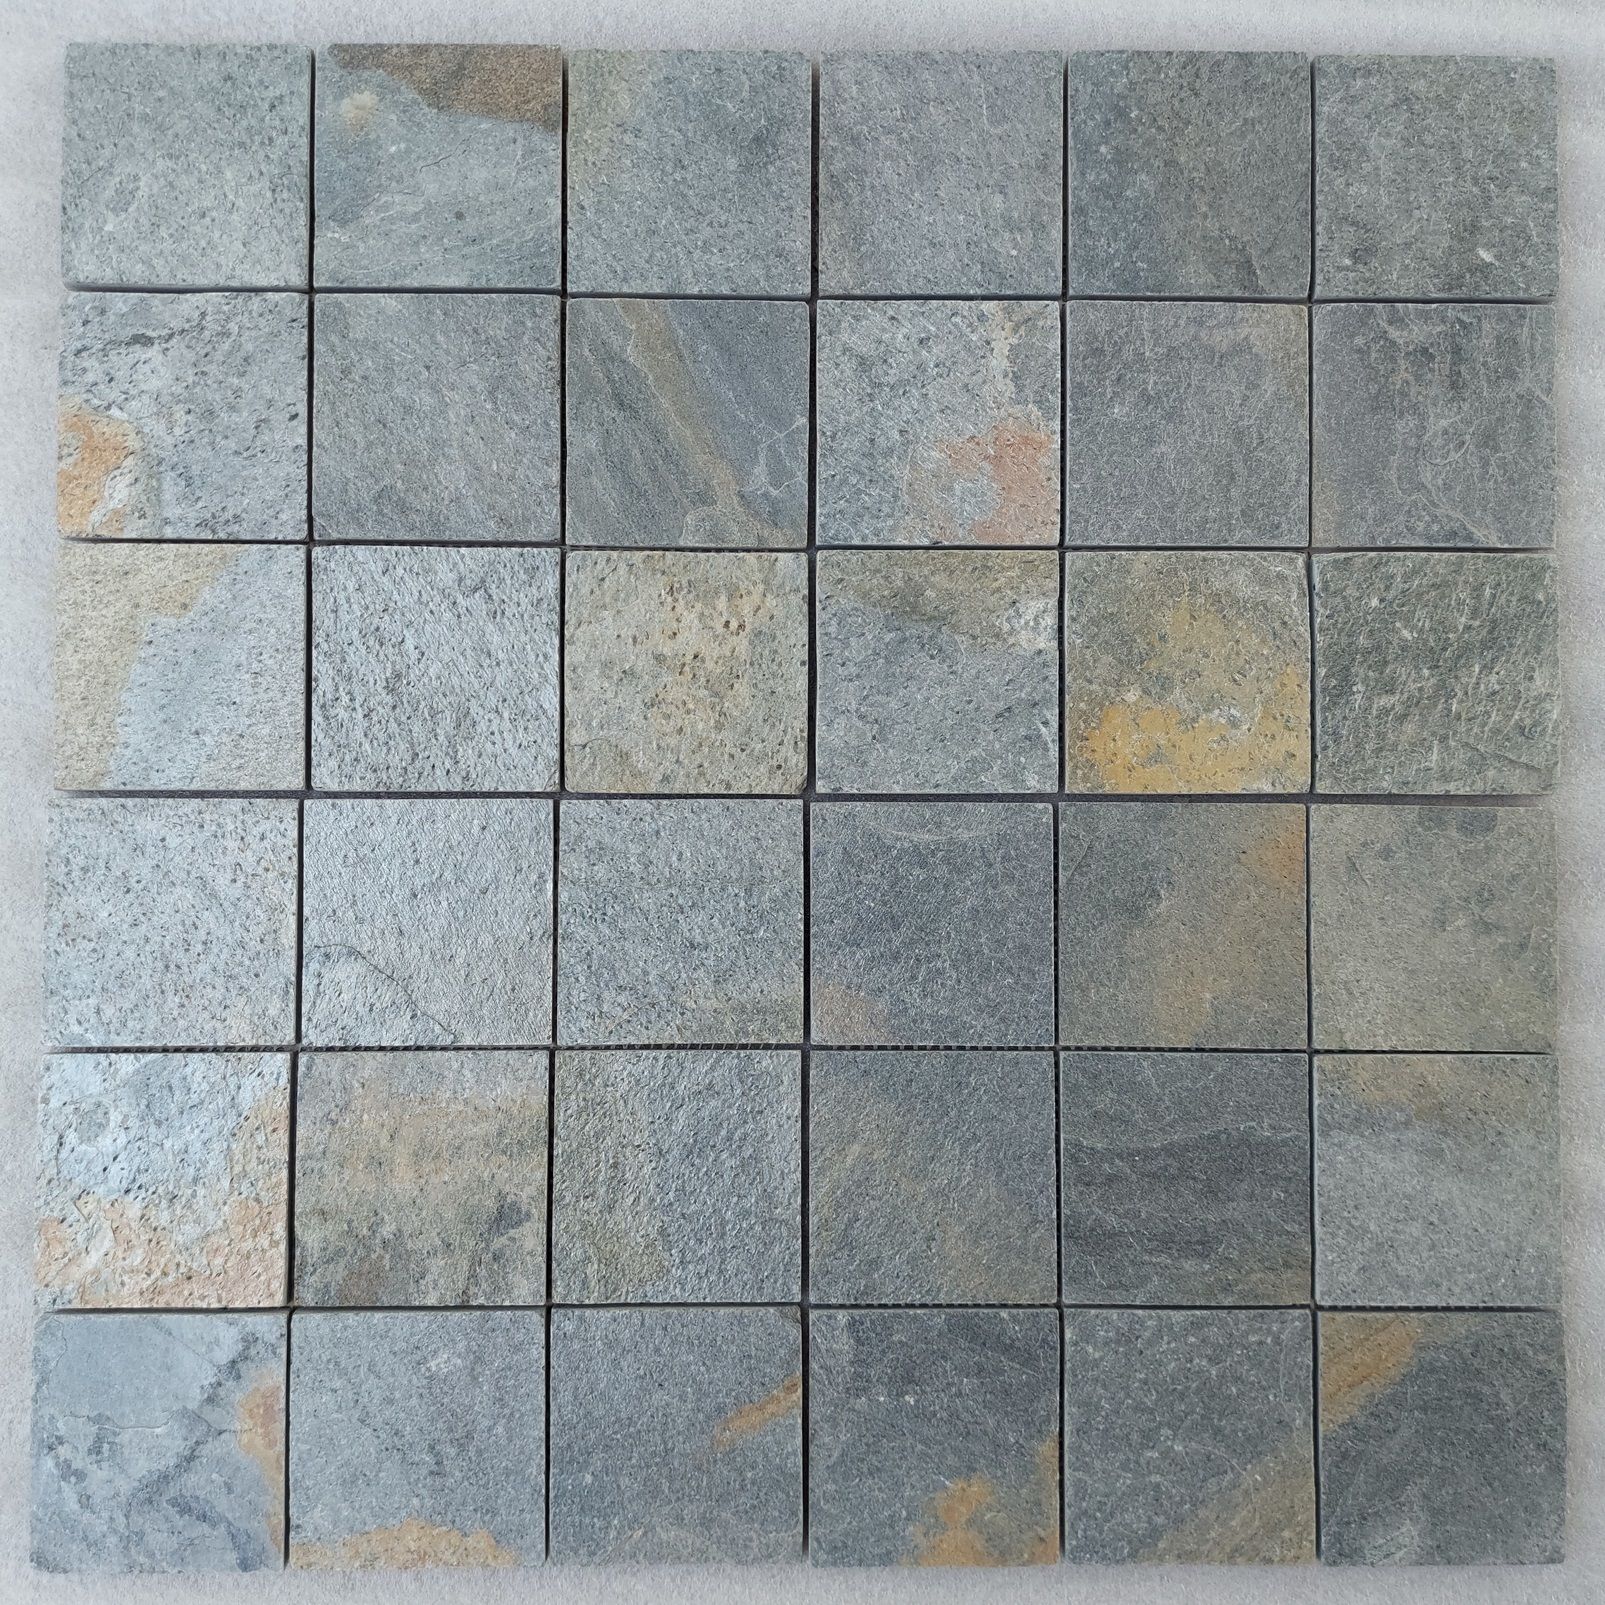 Zeera Green Quartzite Slate Mosaic Tiles Bathroom Flooring Decorative Wall Cladding